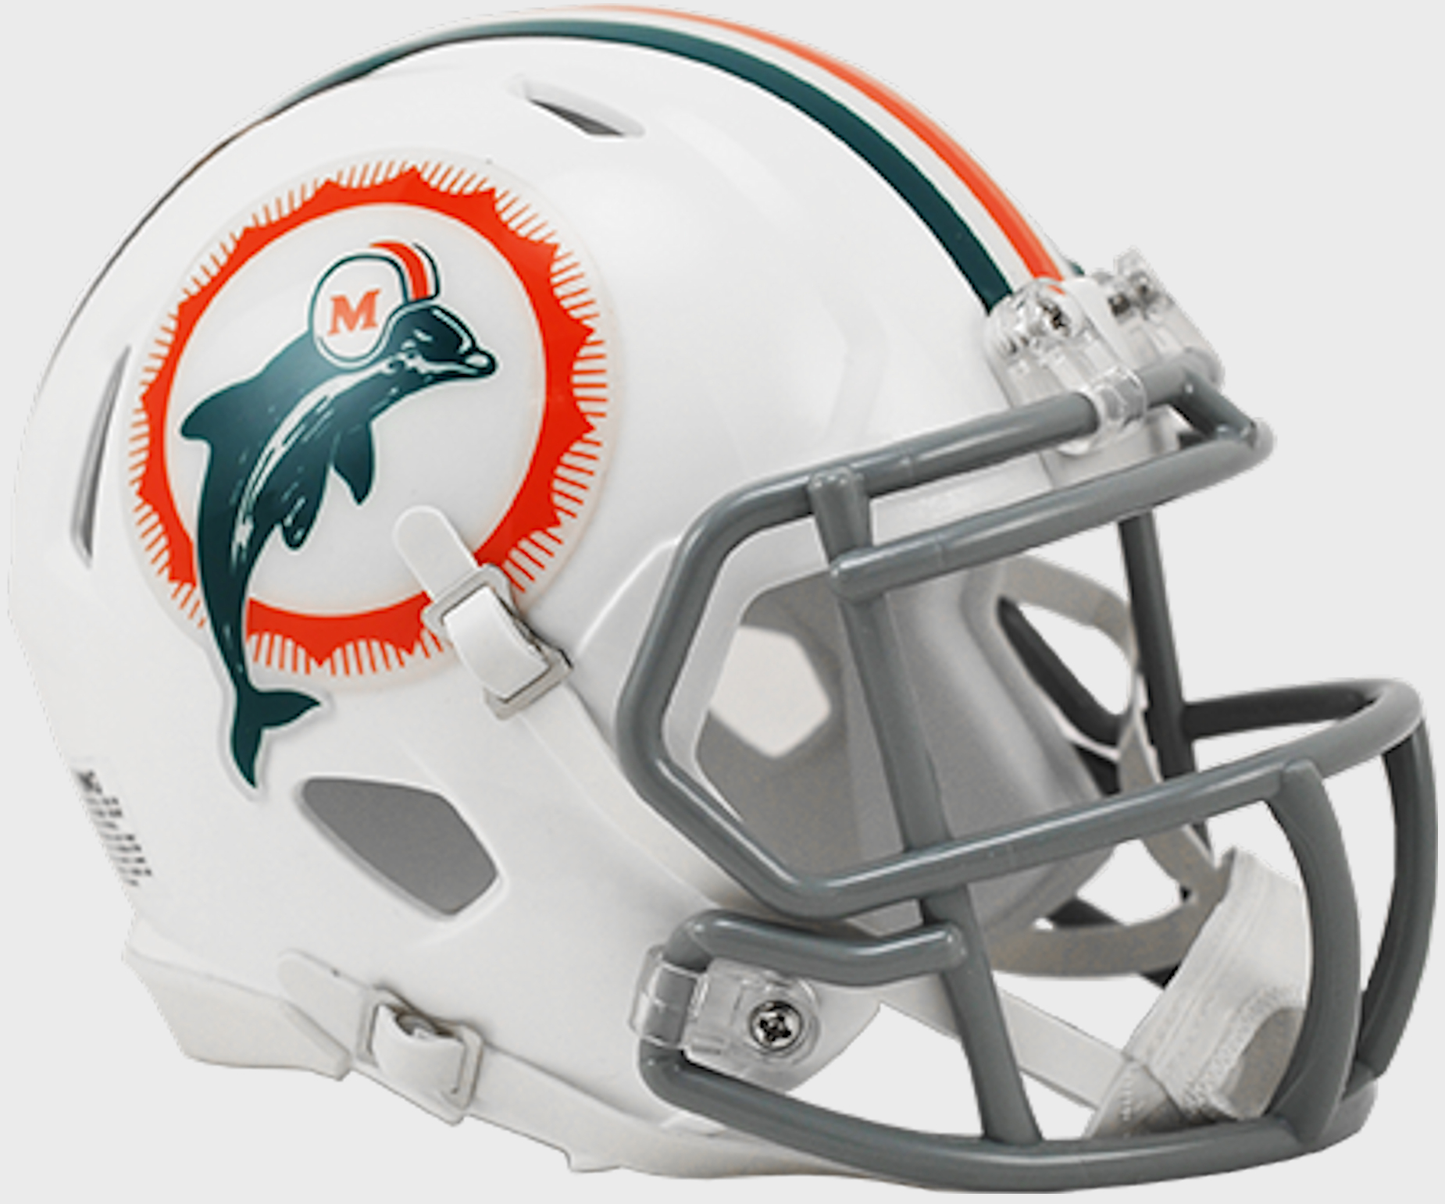 Miami Dolphins throwback mini helmet